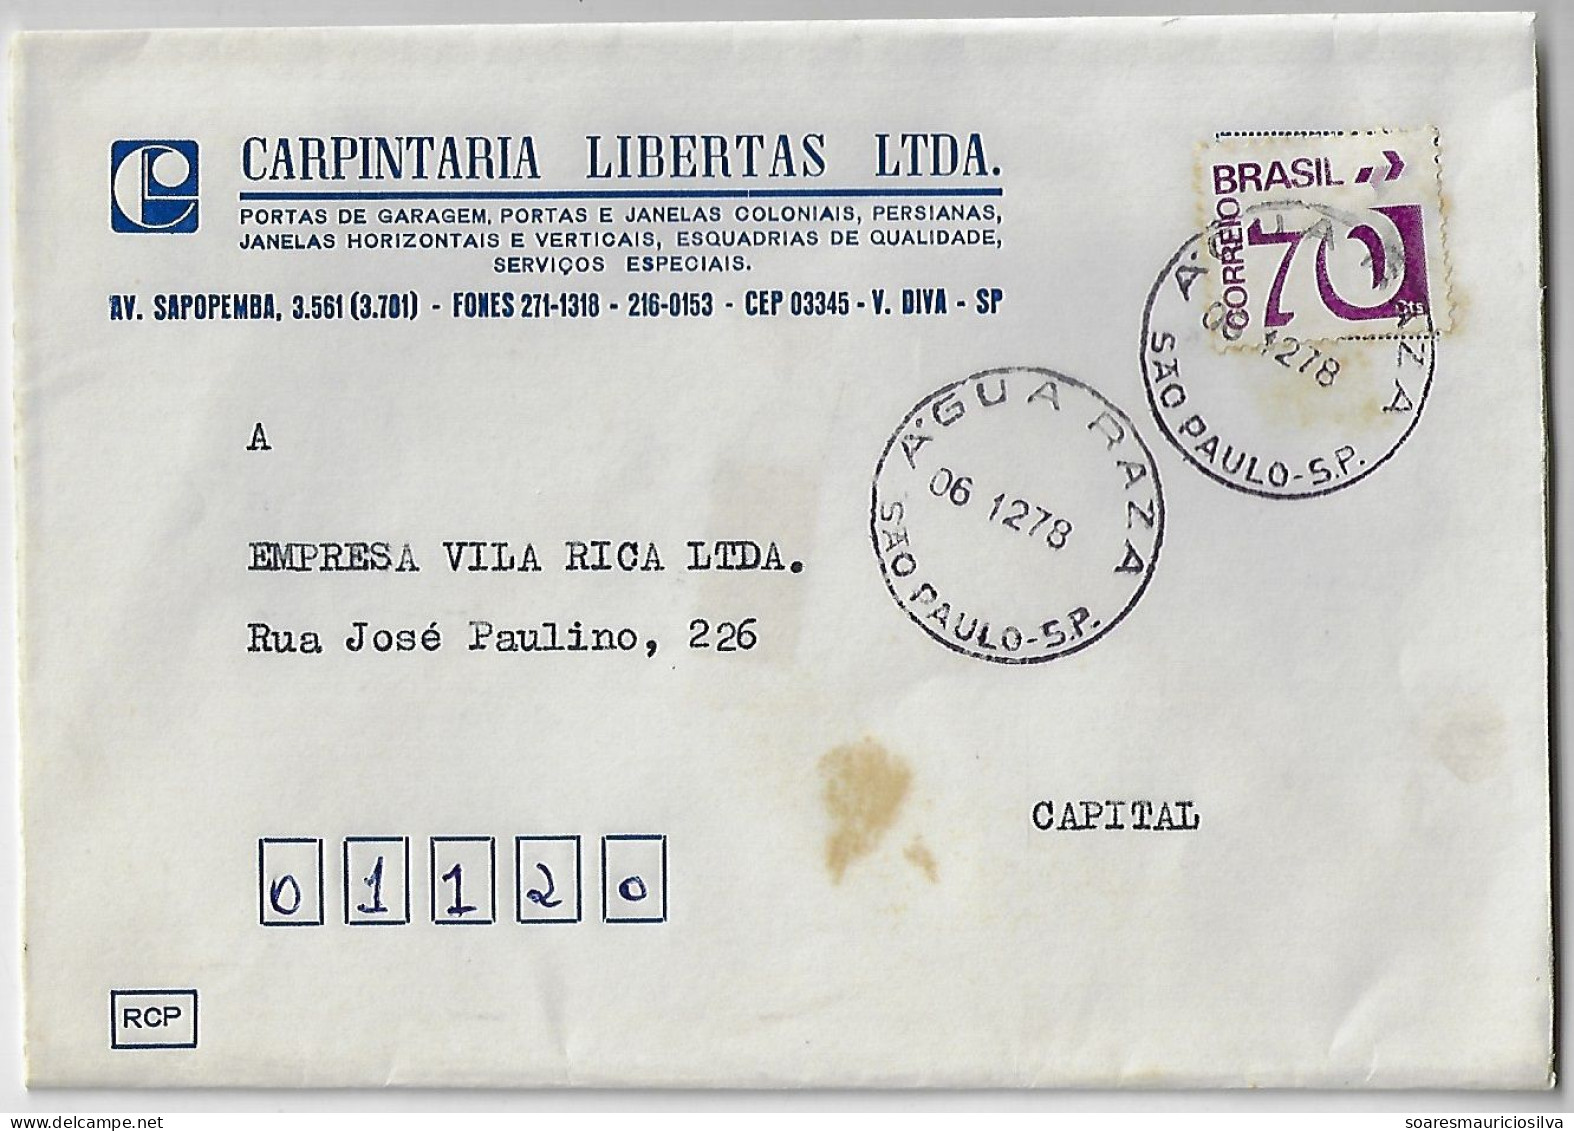 Brazil 1978 Carpentry Libertas Ltd Cover Shipped In São Paulo Agency Água Raza (shallow Water) Definitive Stamp 70 Cents - Storia Postale